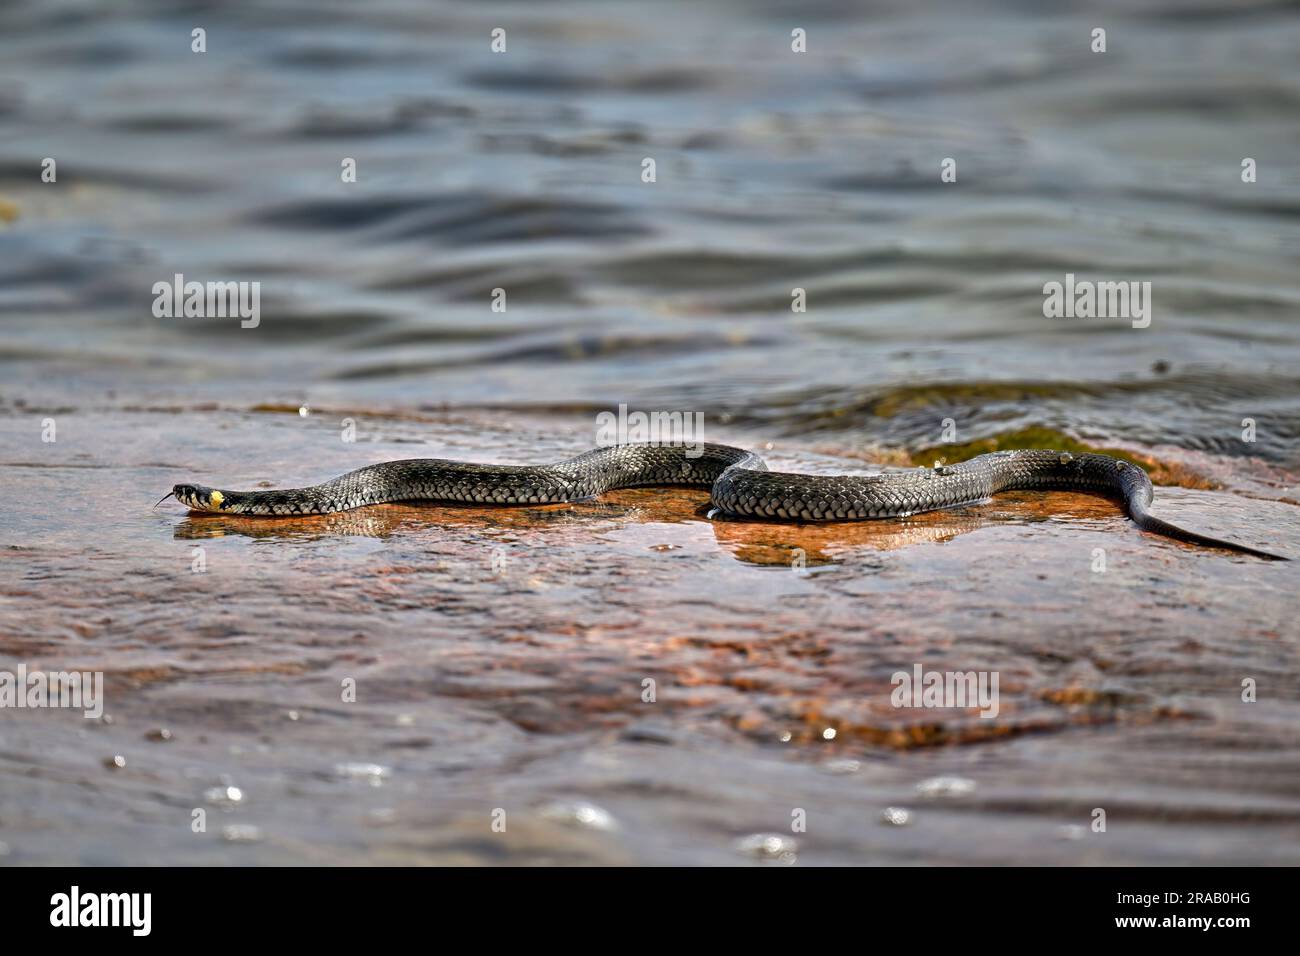 Grass snake basking on the rock Stock Photo